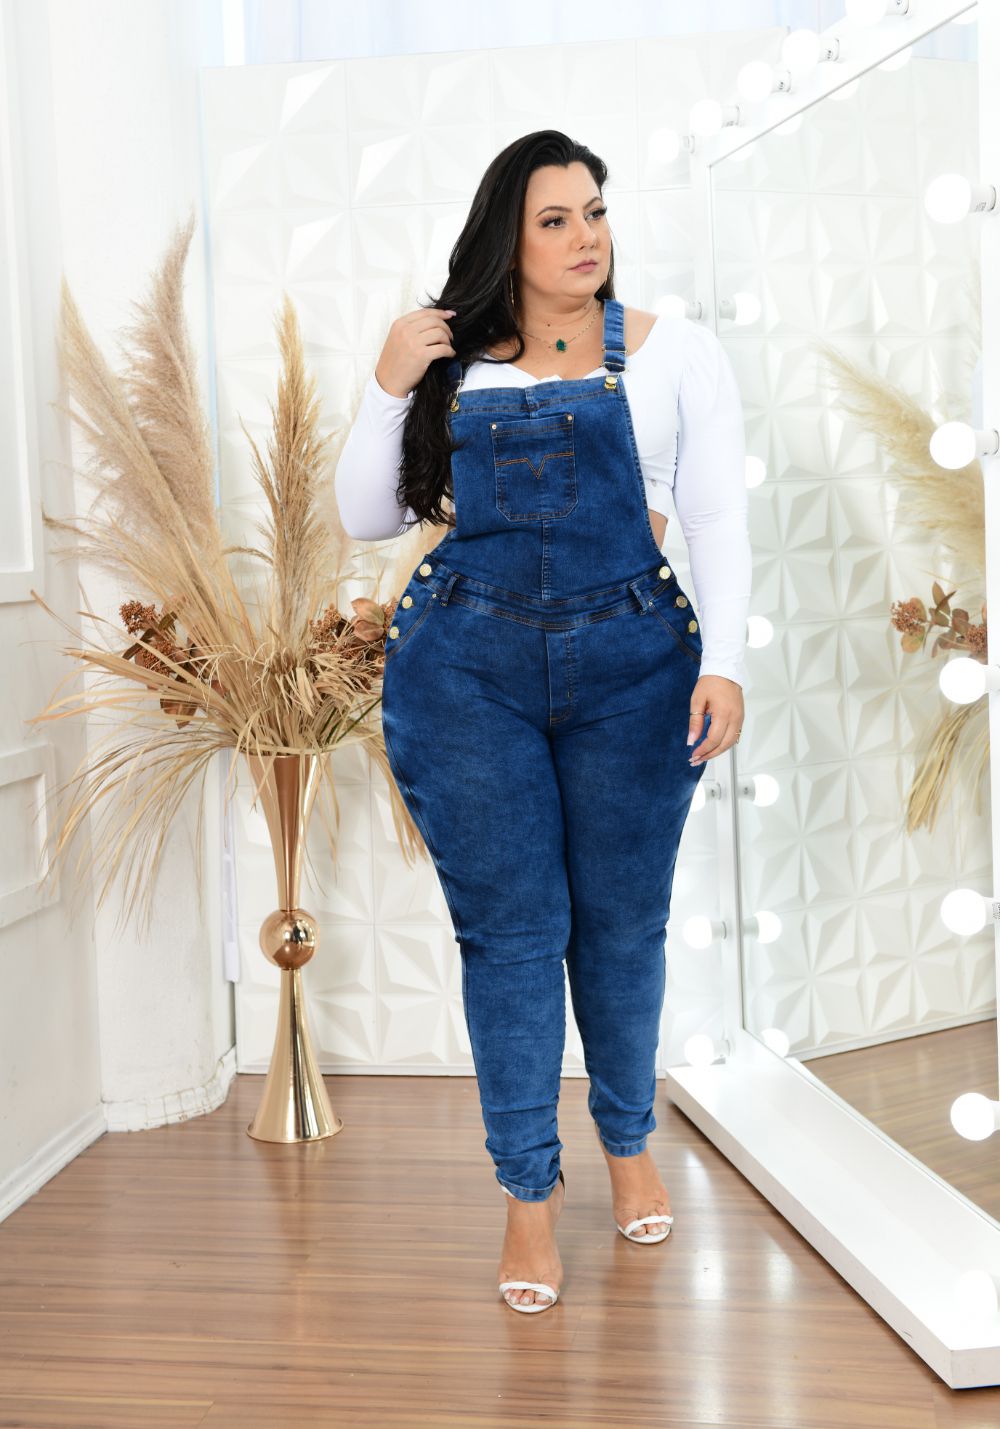 Macacão Jeans Latitude Plus Size Kethler Azul - Ane Jeans - 11 Anos